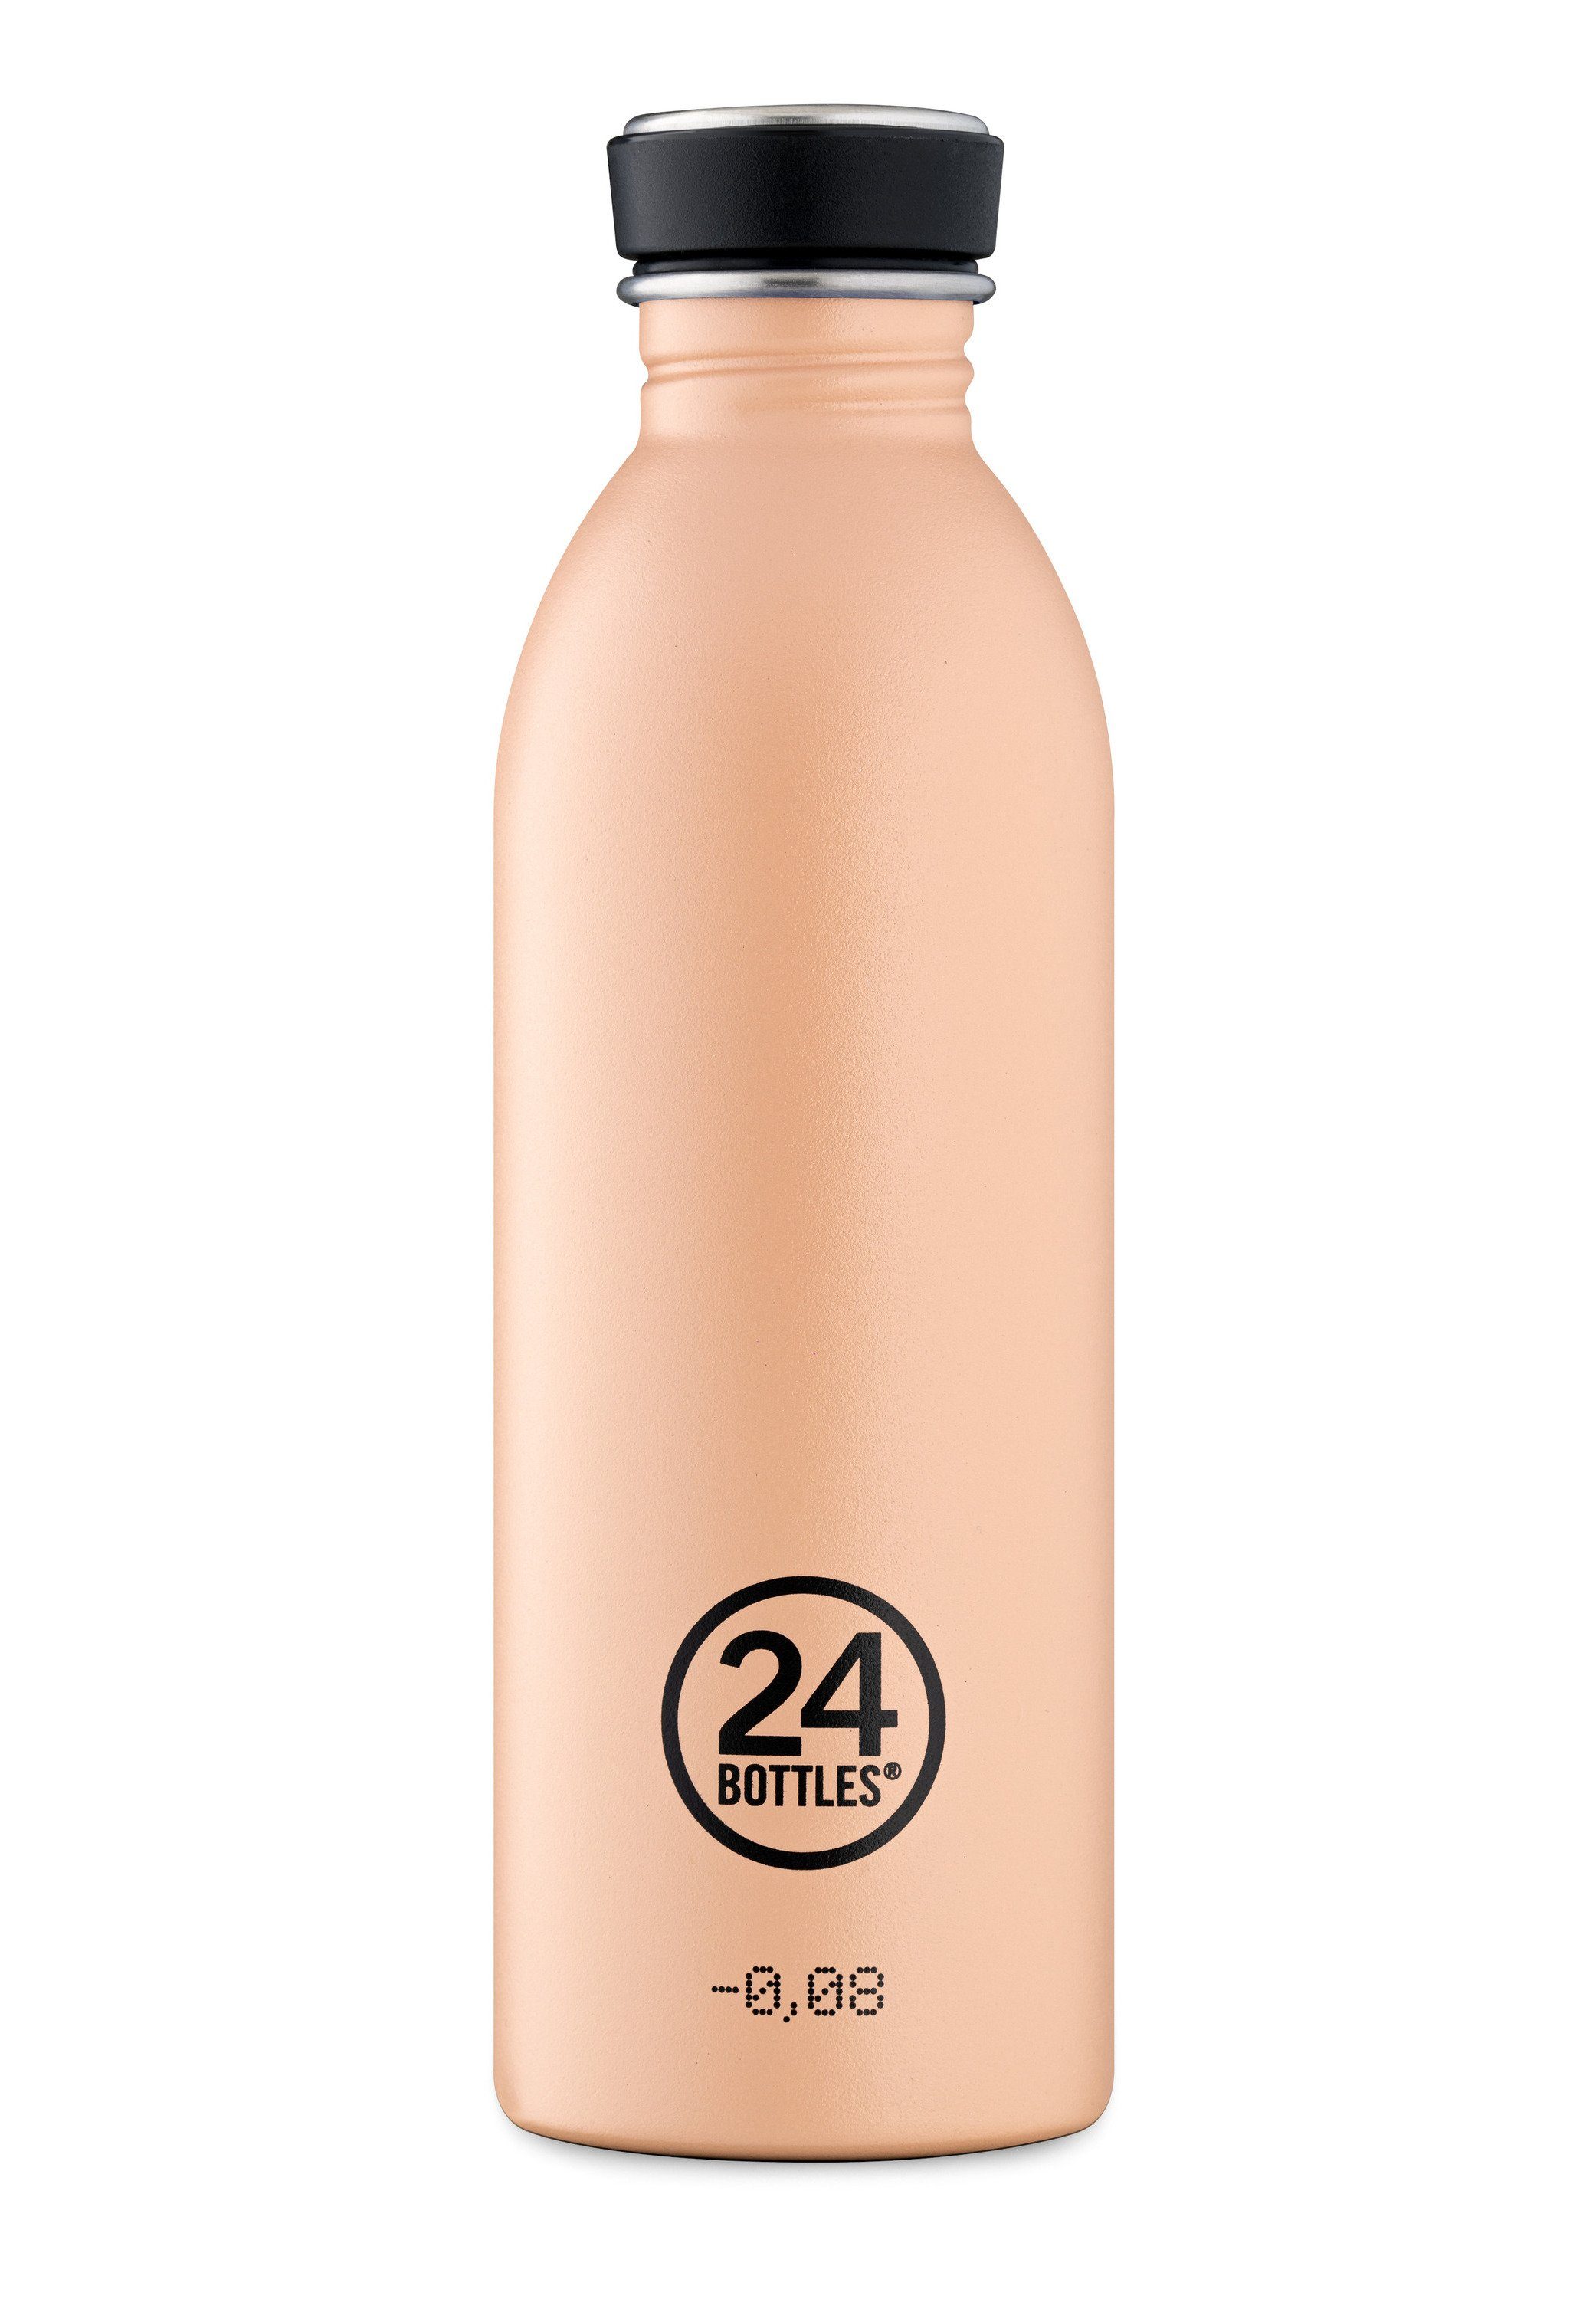 Trinkflasche 24 Earth desert Urban Bottles sand